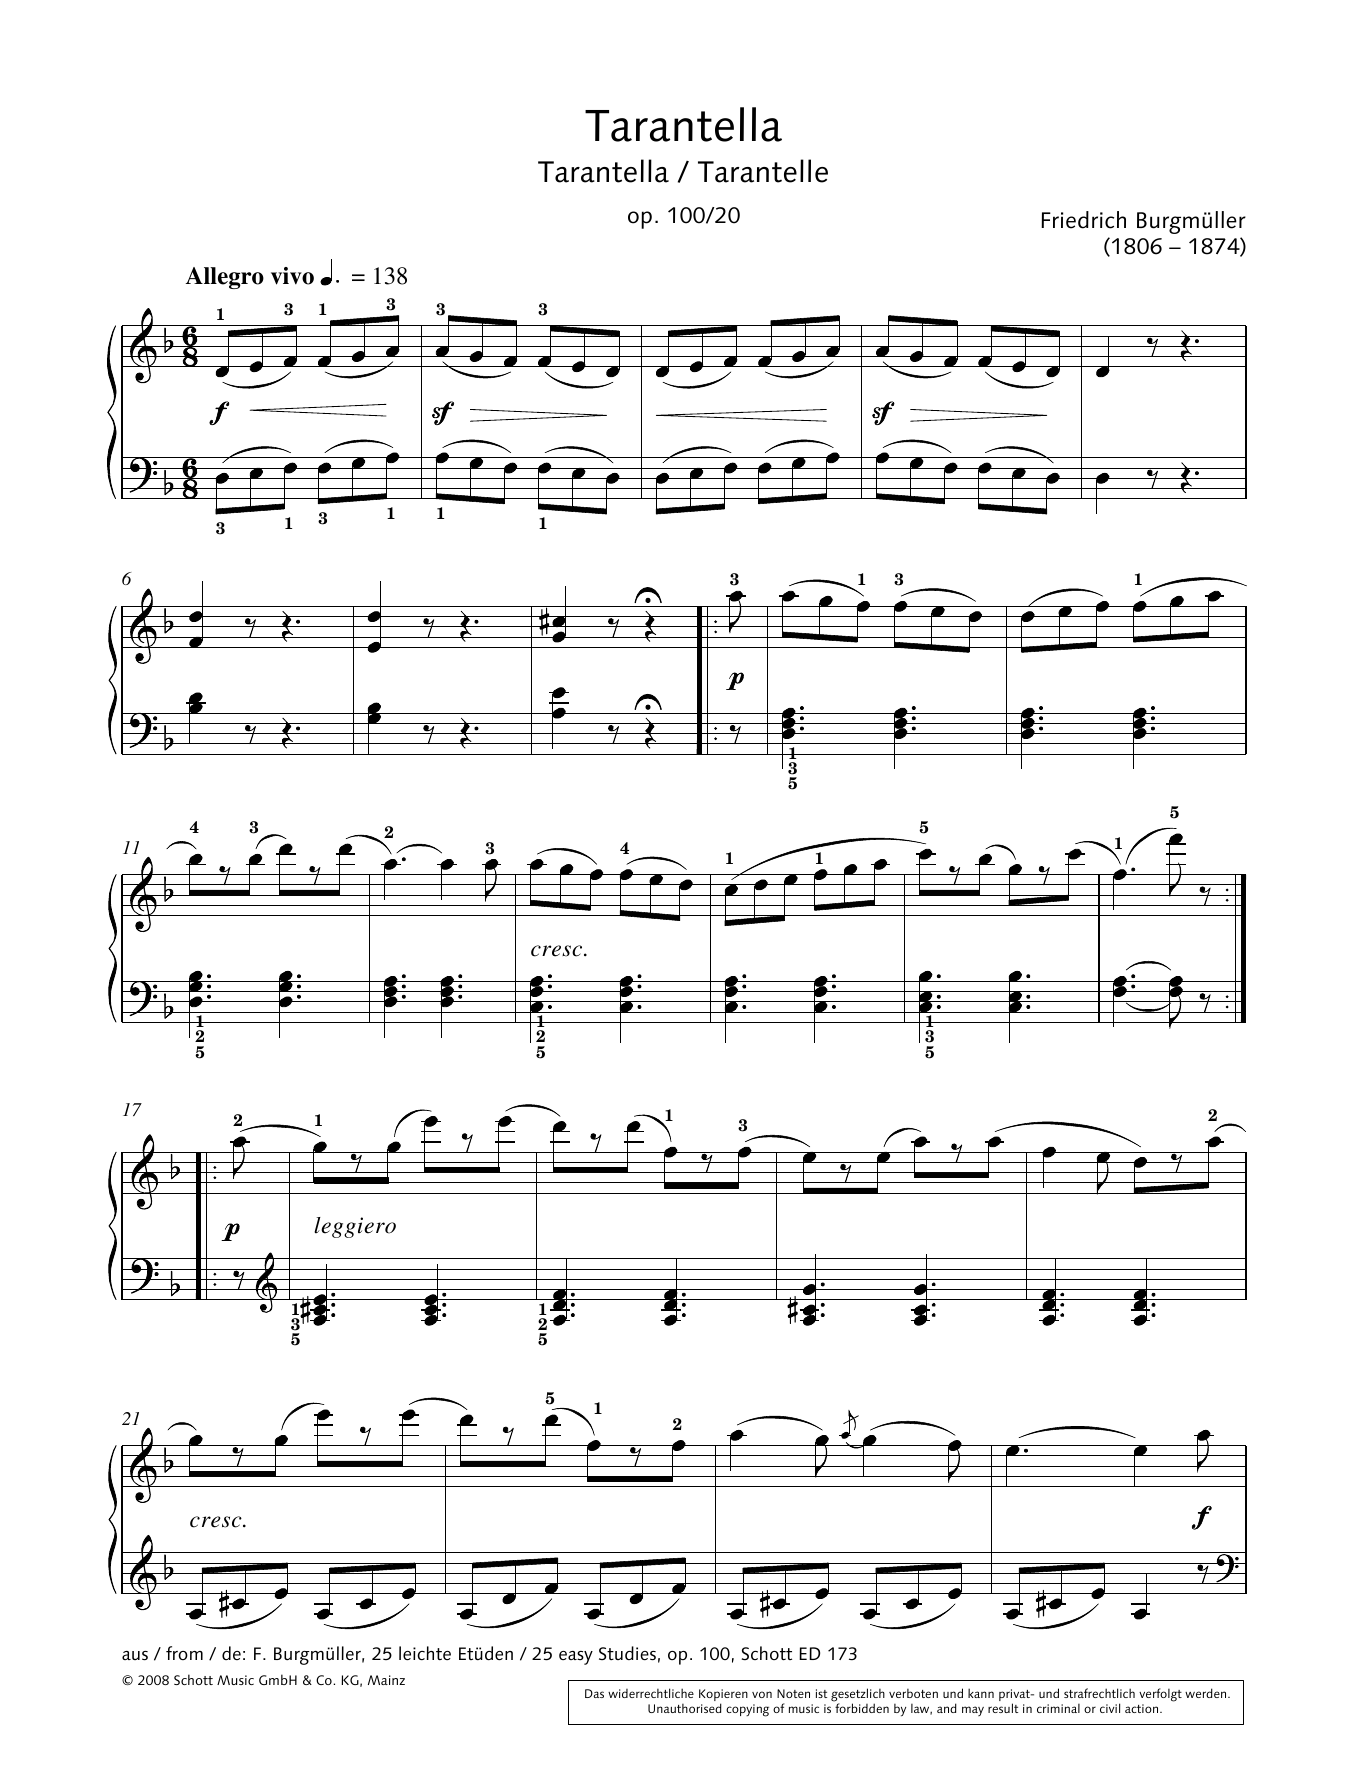 Hans-Gunter Heumann Tarantella Sheet Music Notes & Chords for Piano Solo - Download or Print PDF